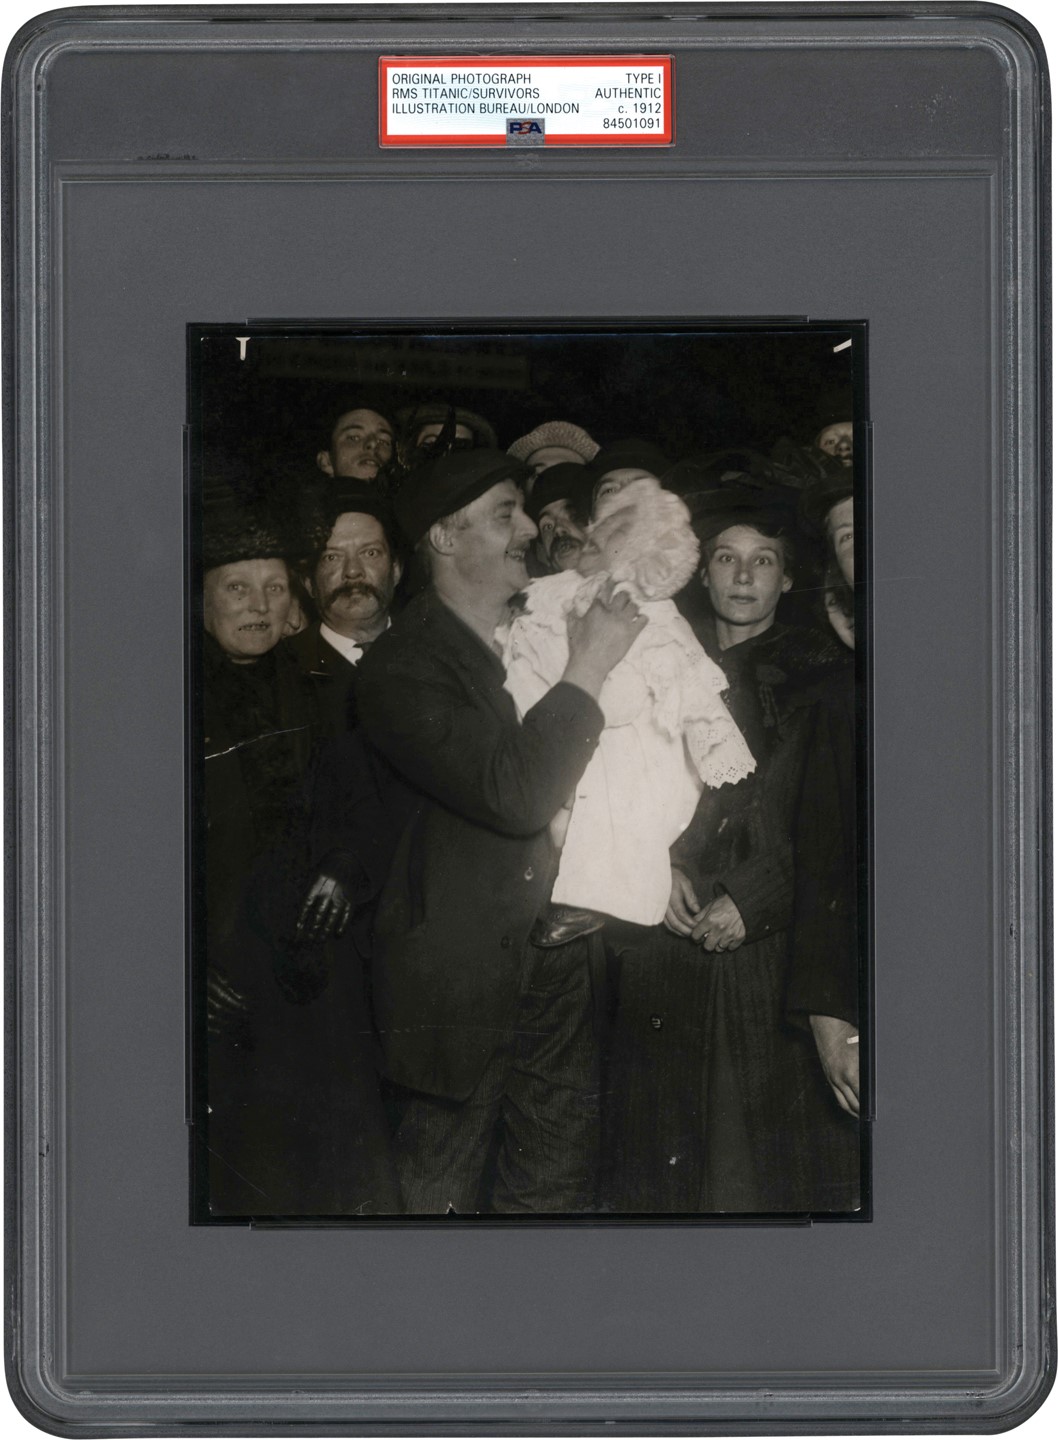 - 1912 Crowd Awaiting the Titanic Survivors Photograph (PSA Type I)